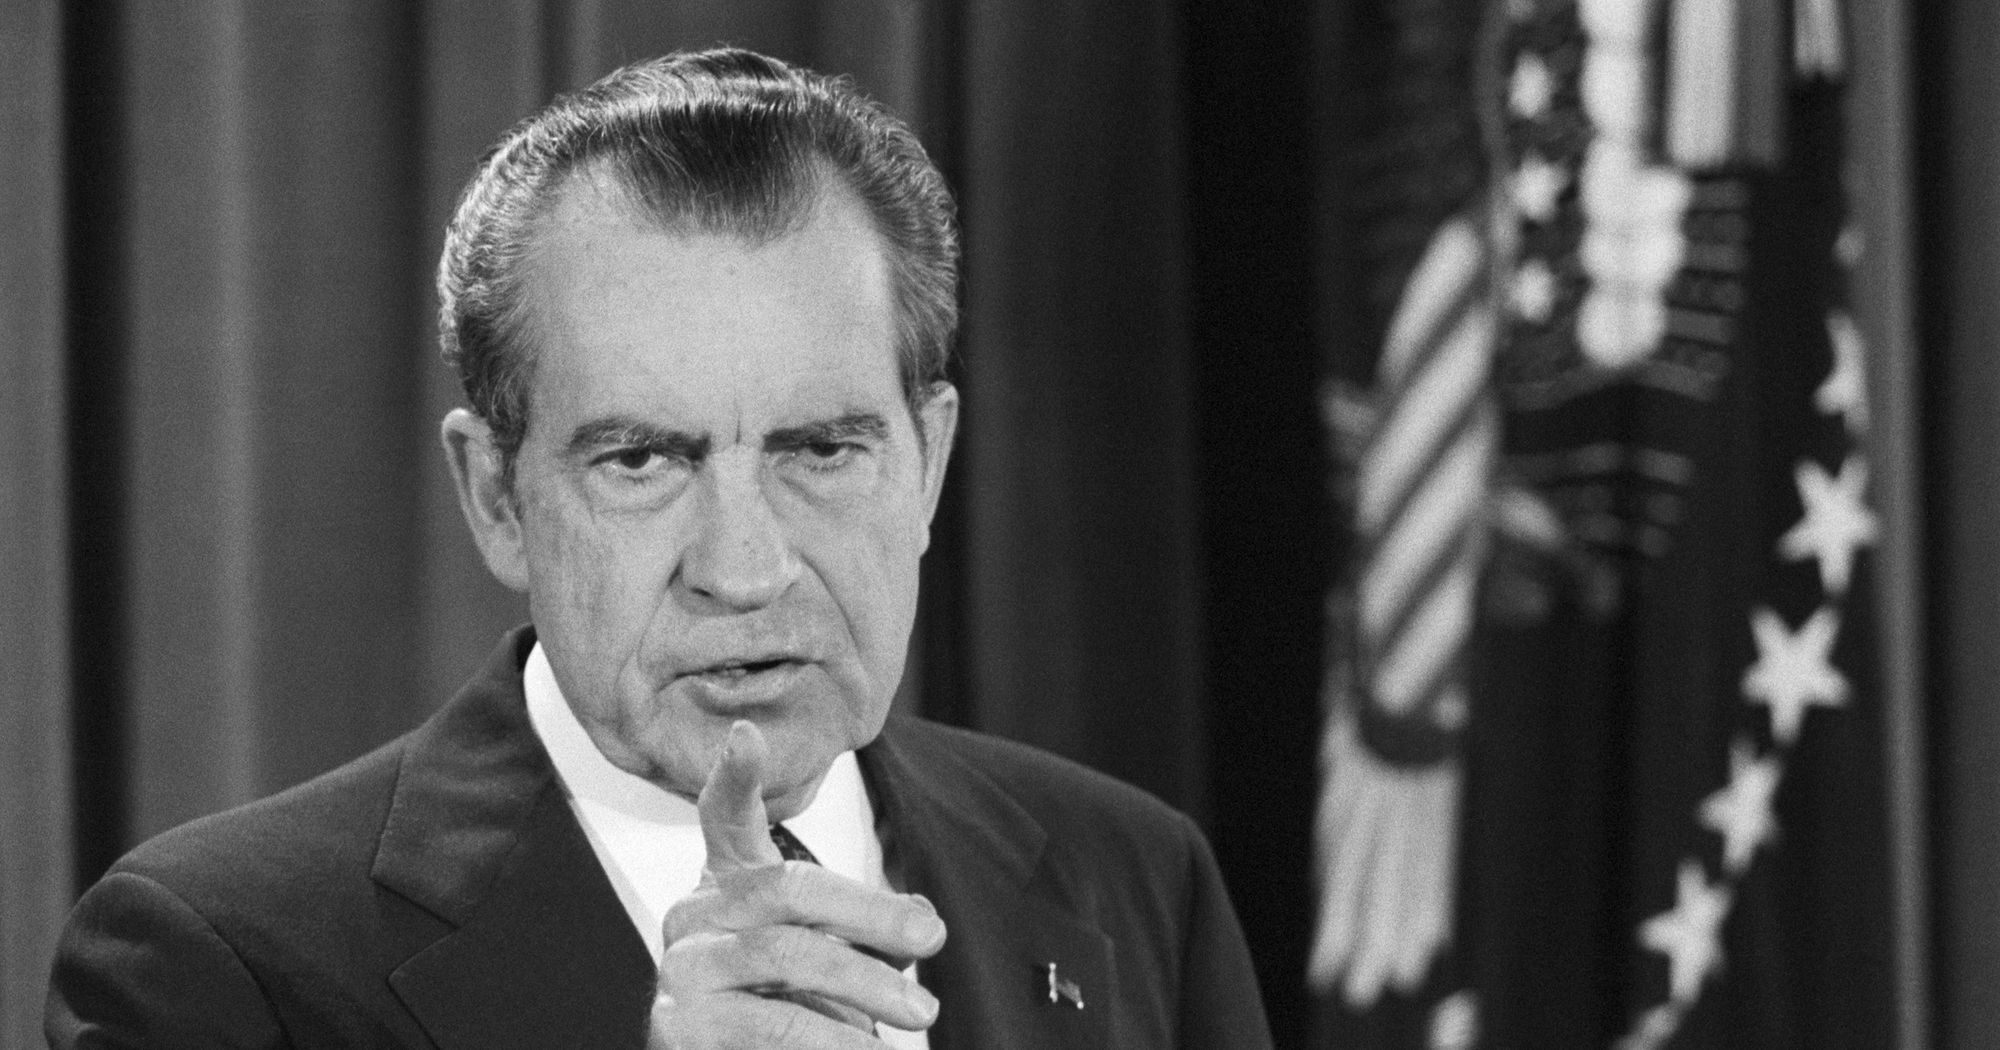 Richard Nixon (No. 37) - IQ 142.9